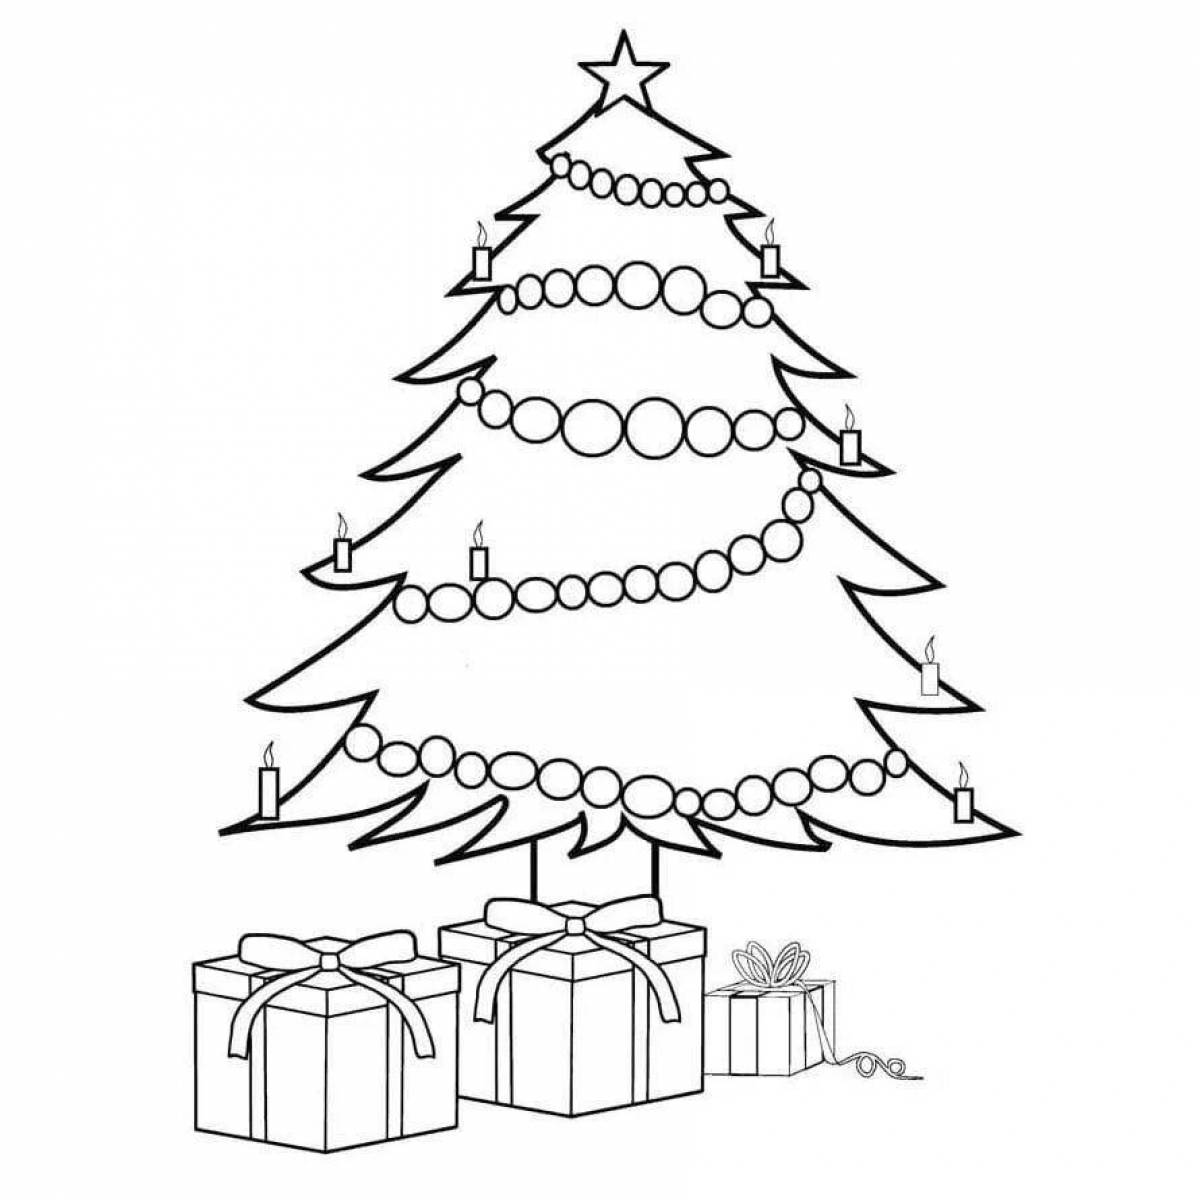 Innovative Christmas tree coloring card